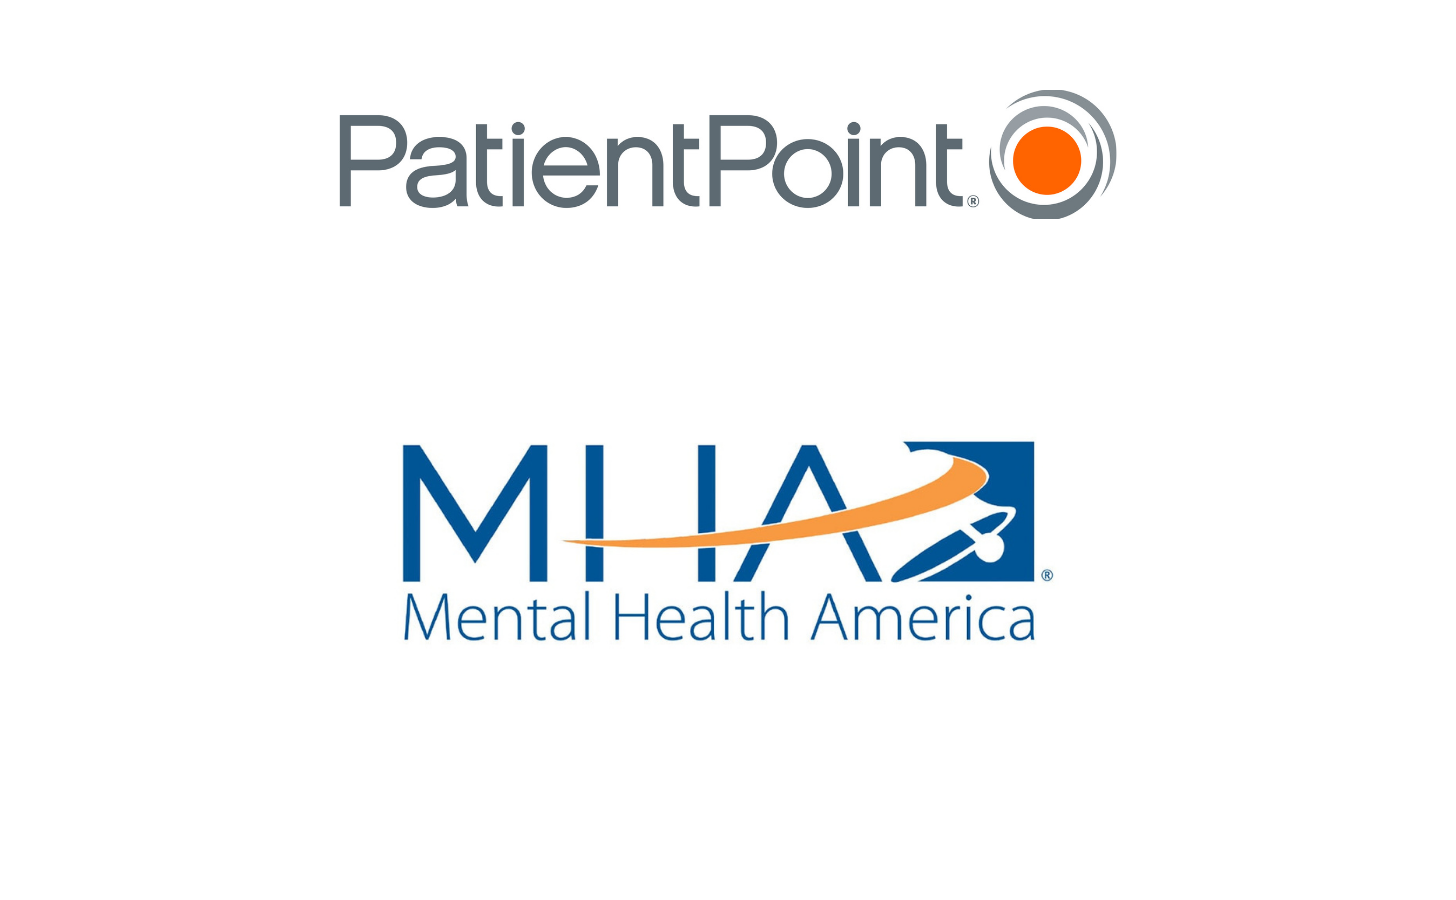 PatientPoint Mental Health America_logo